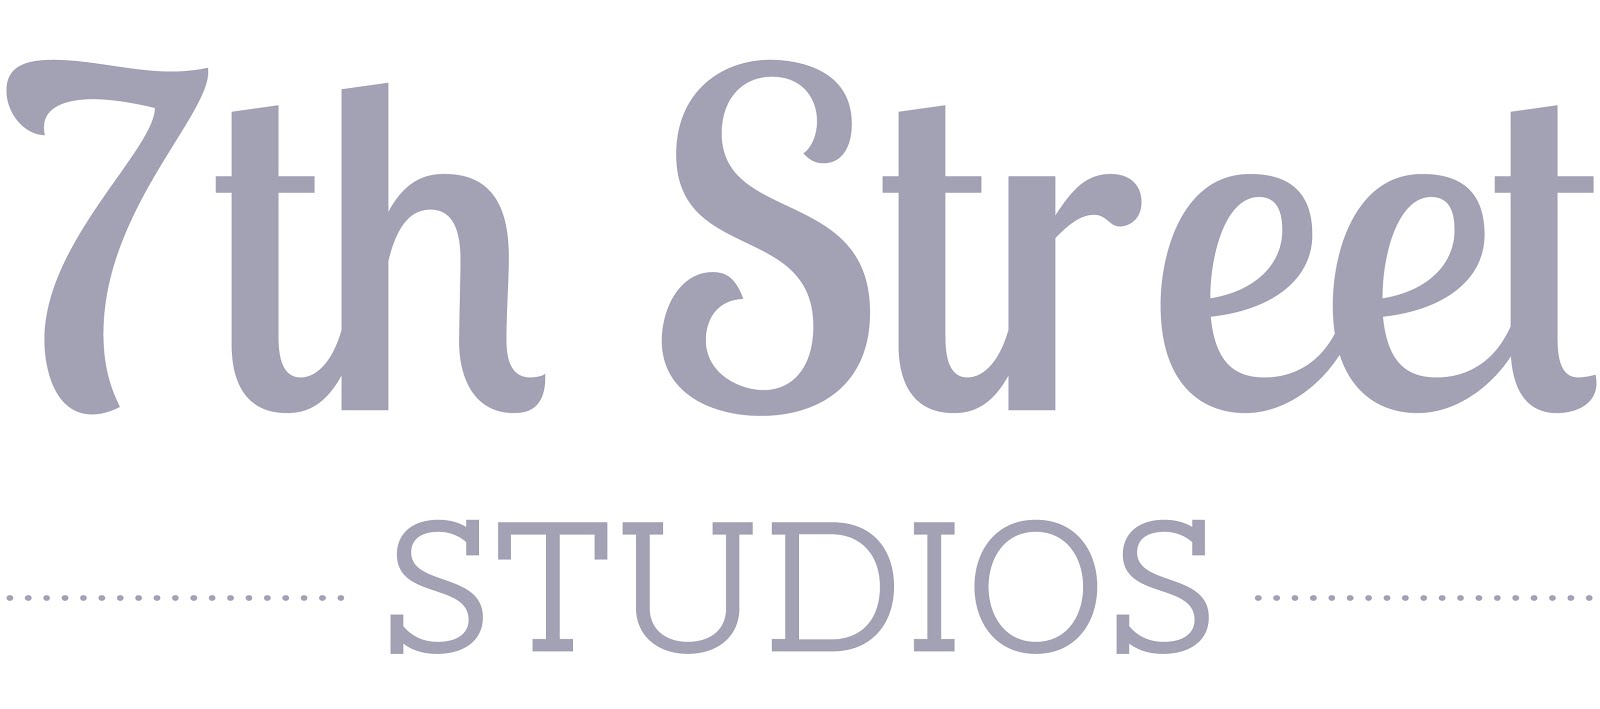 7th Street Studio